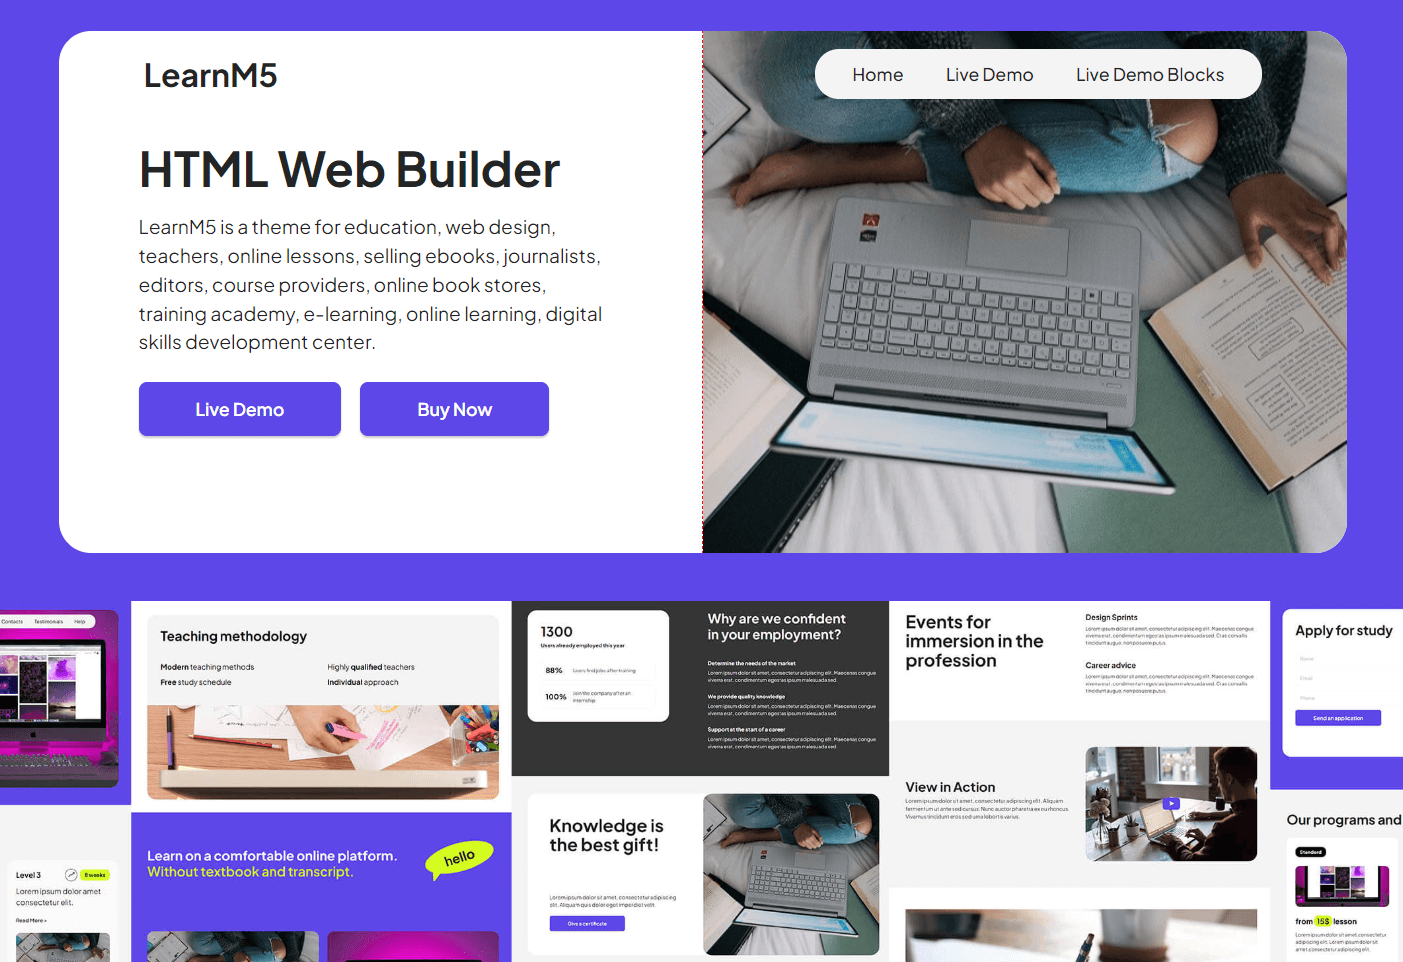  HTML Website Creator